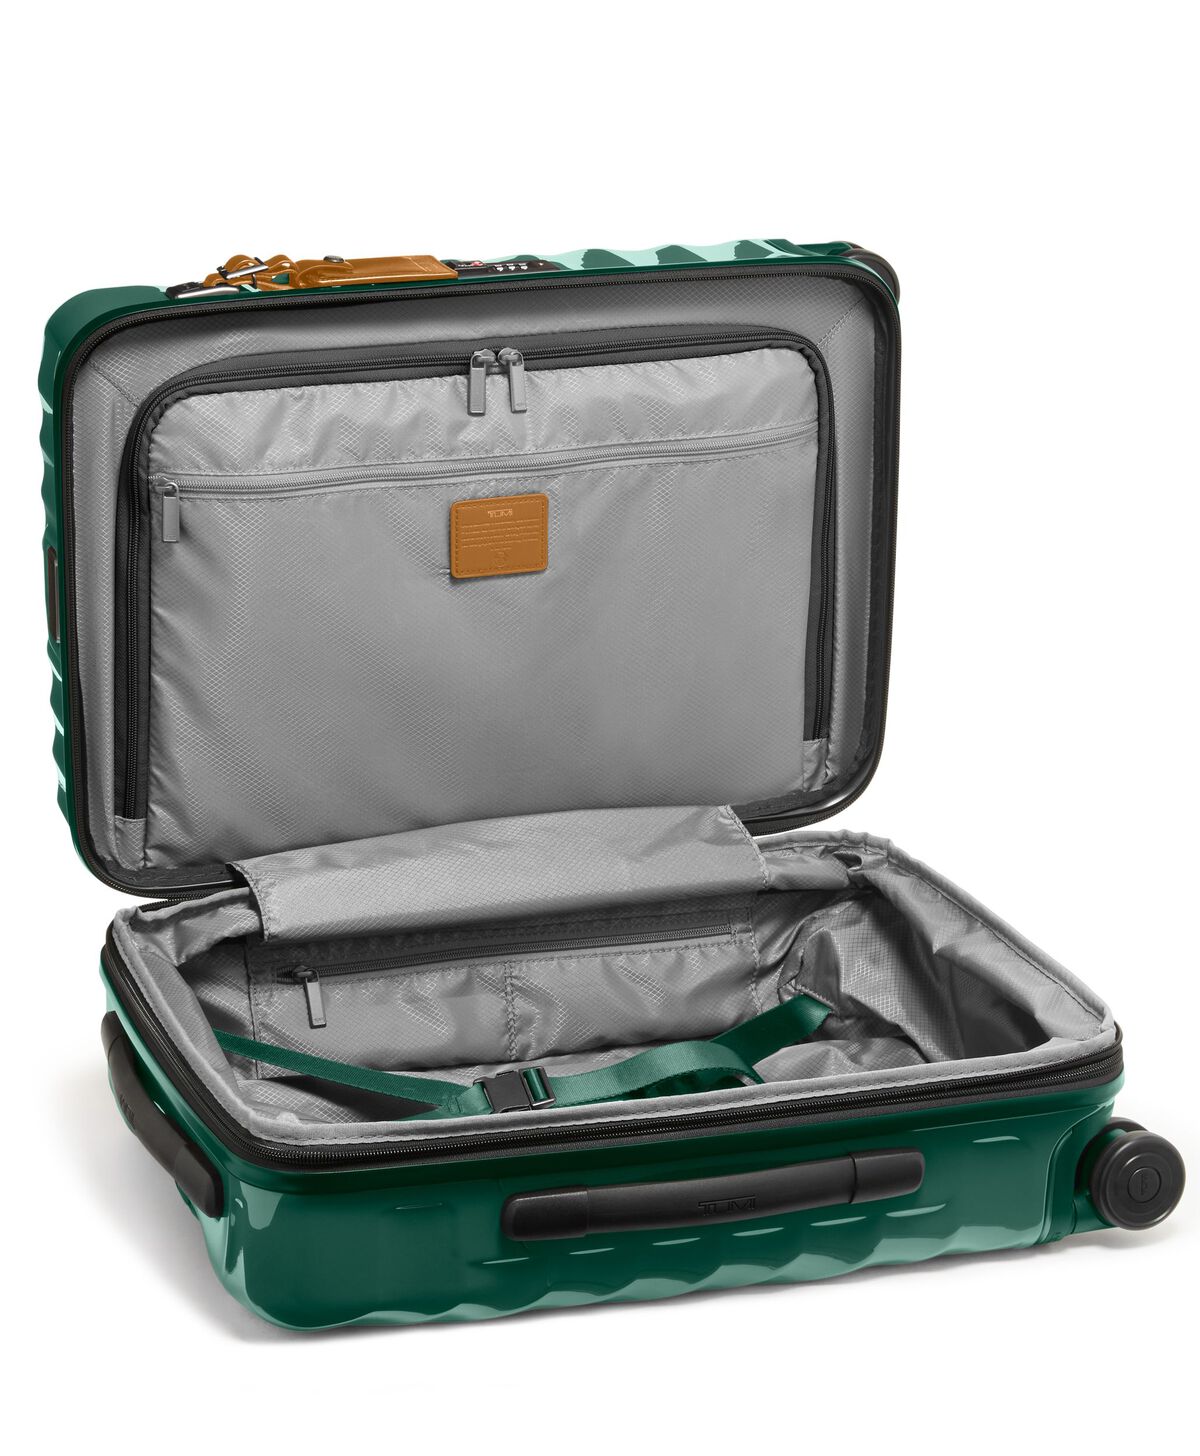 Tumi International Hard Shell Carry-on Luggage - Hunter Green